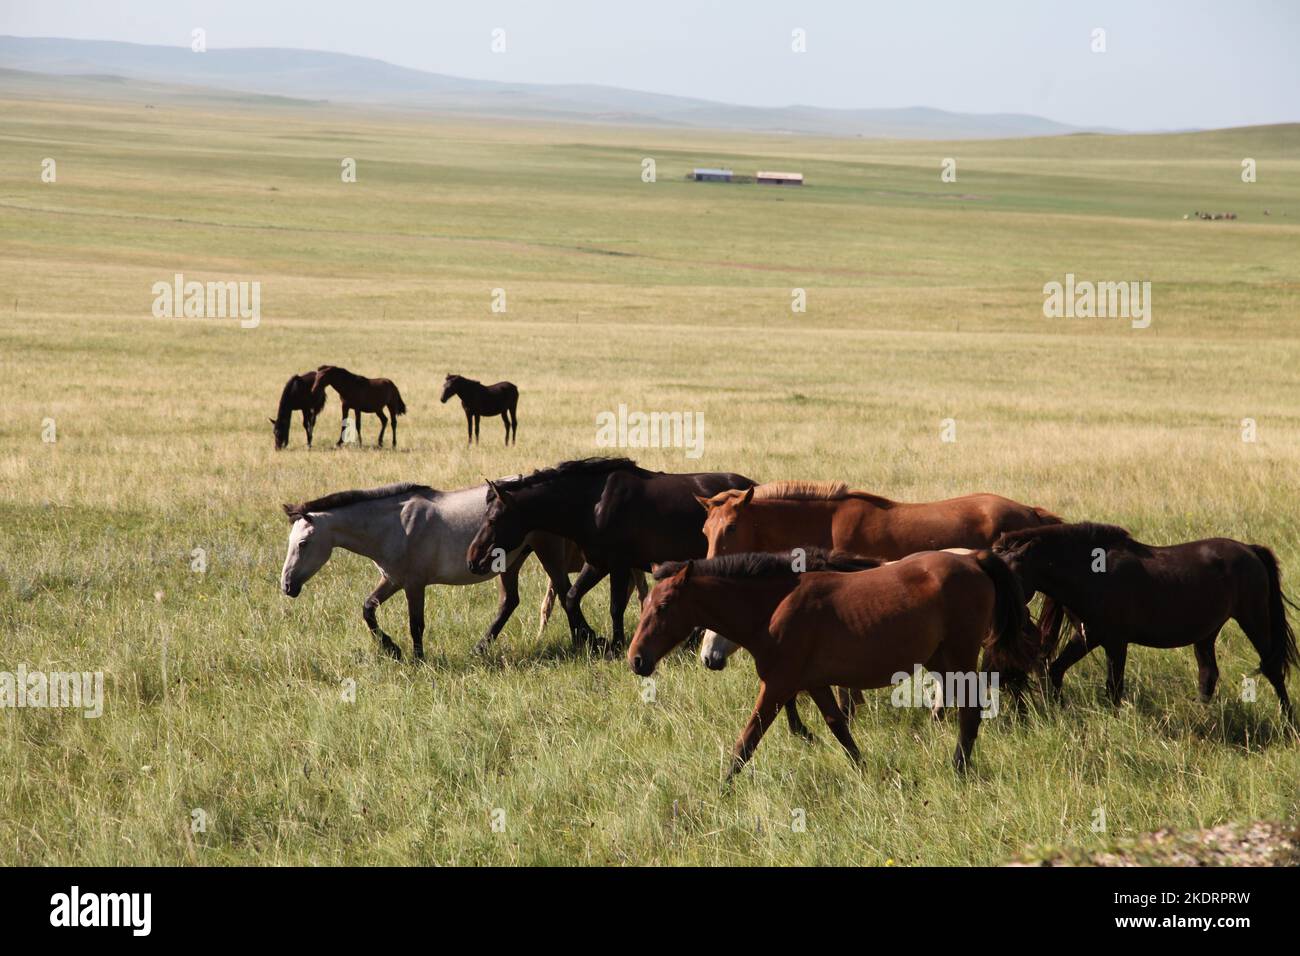 Xilingol de Mongolia Interior: Hermoso y elegante caballo mongol Foto de stock